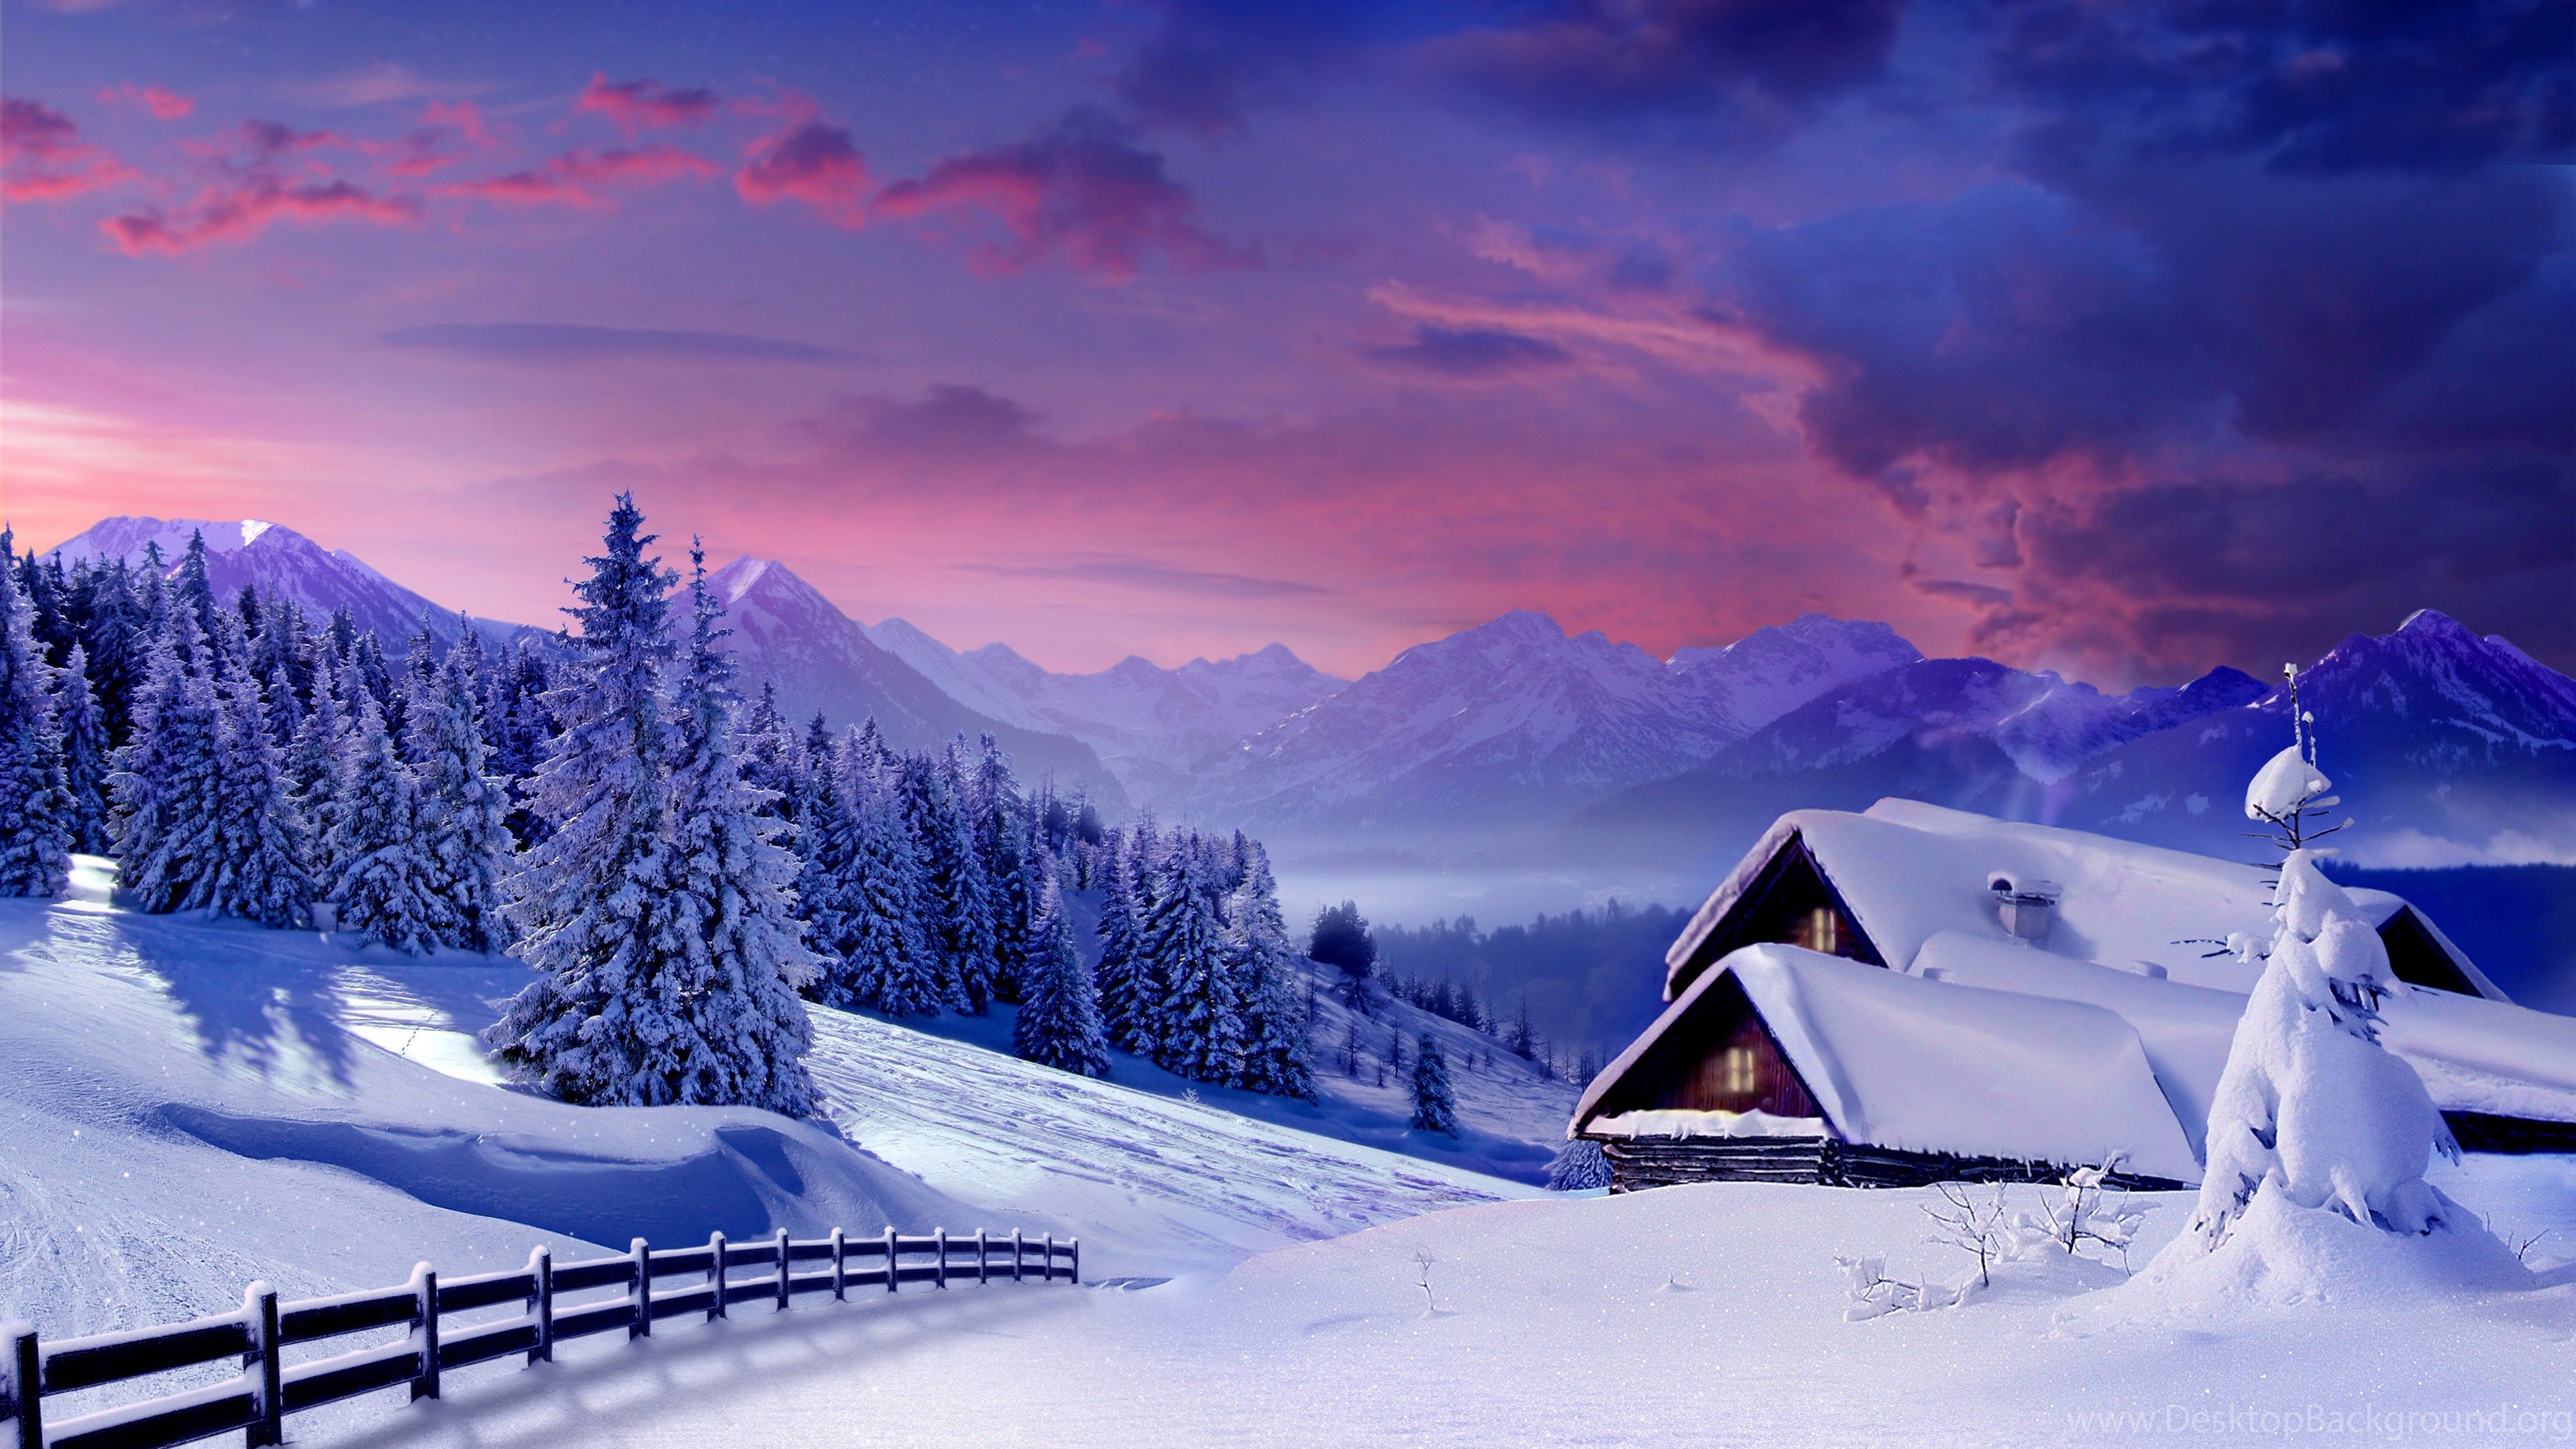 Wallpapers Sky, Snow, Winter, Clouds, Spruce, Snowy Winter. Desktop Backgrounds